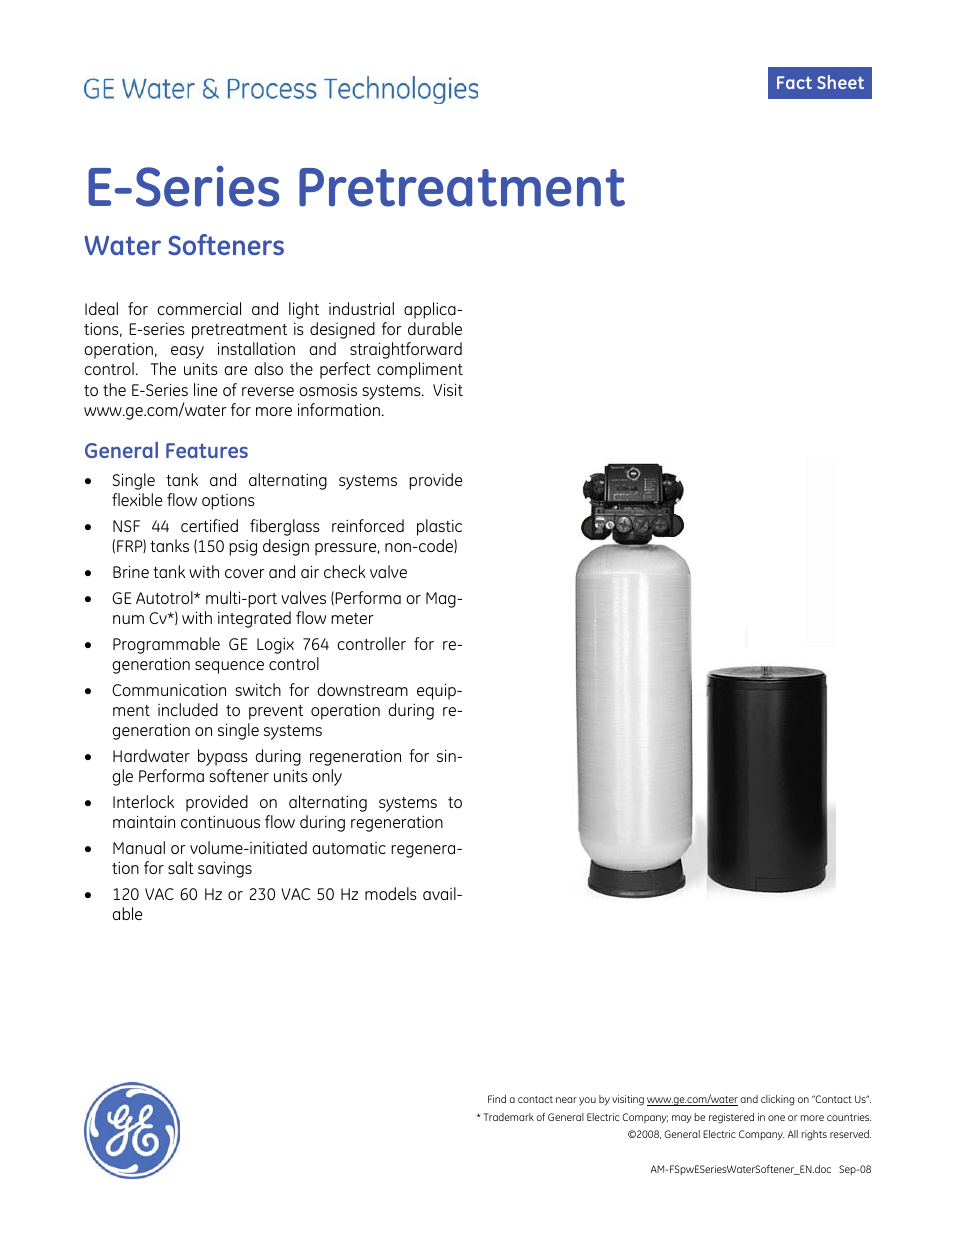 E-Series Pretreatment - Water Softeners